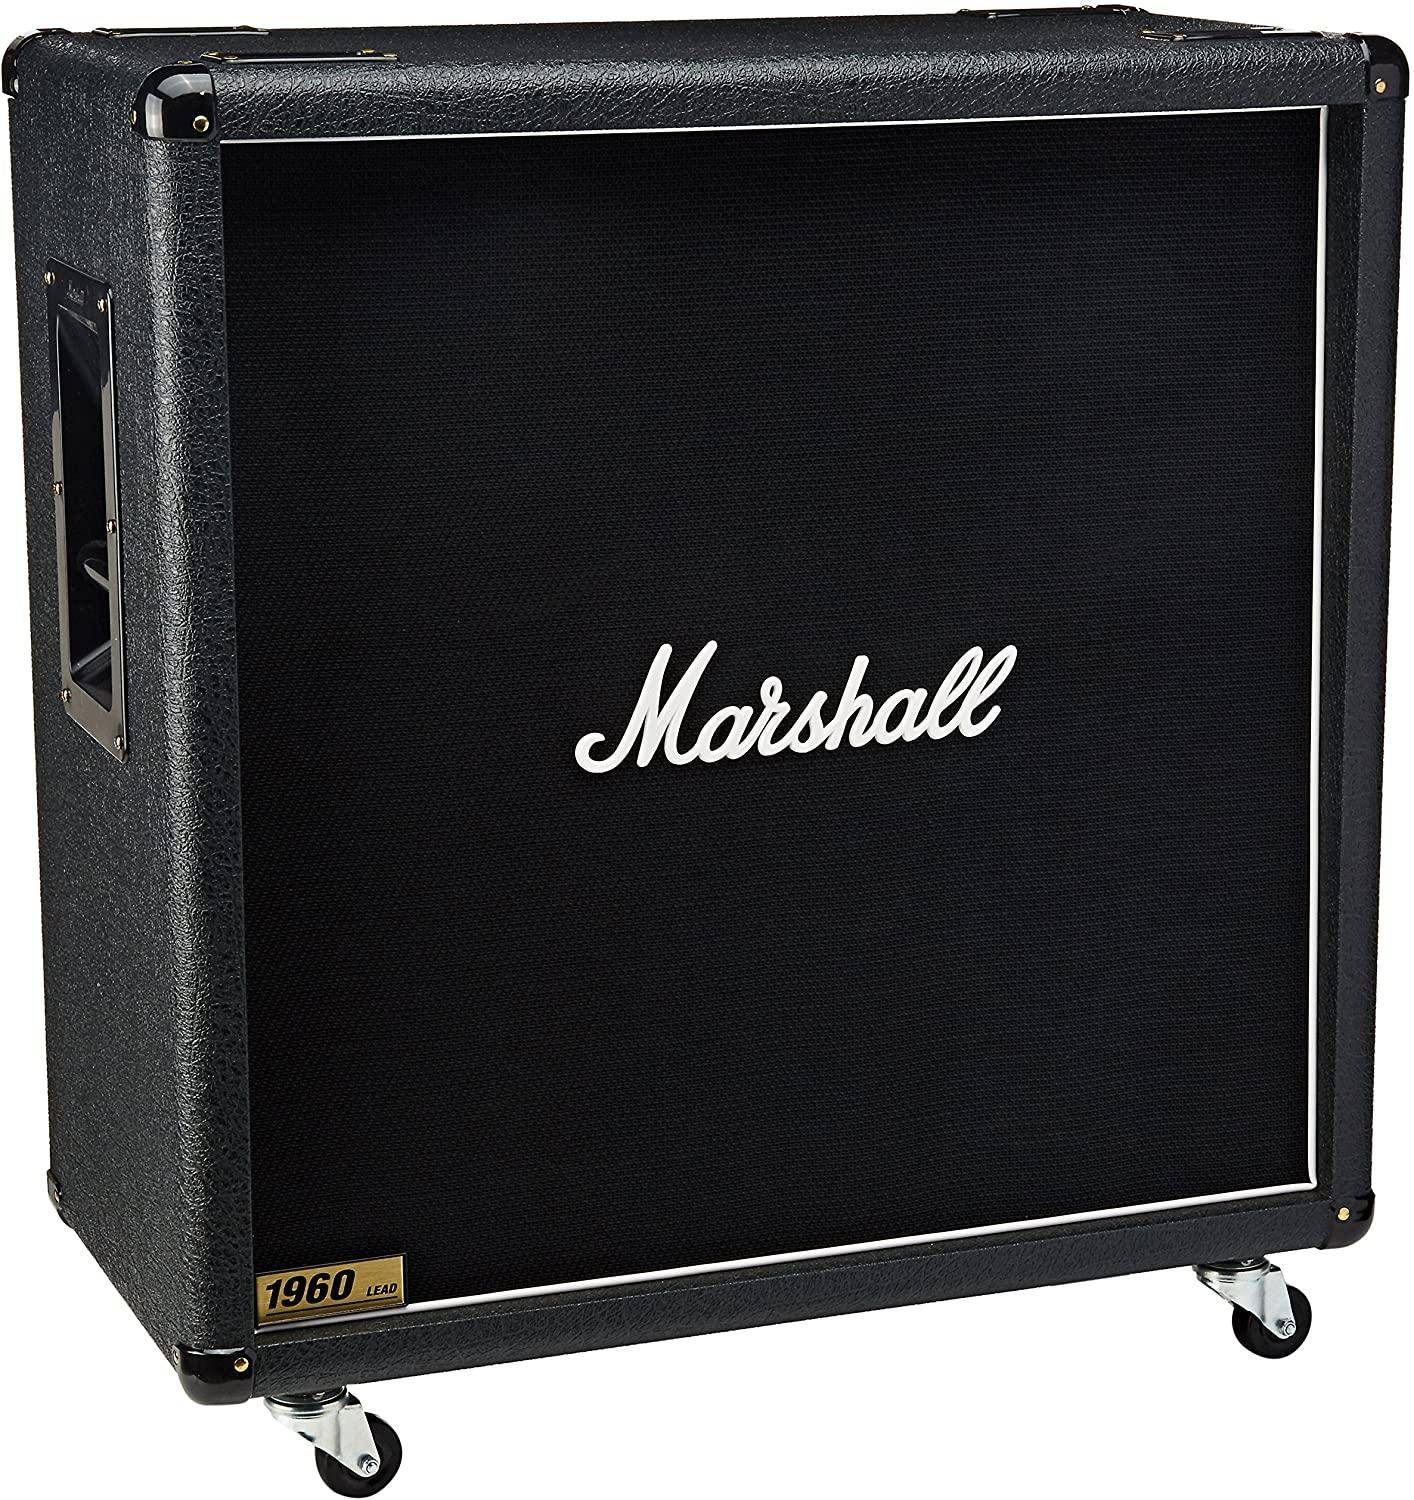 Marshall 1960B 300 Watt 4x12 Guitar Extension Cabinet zoom image